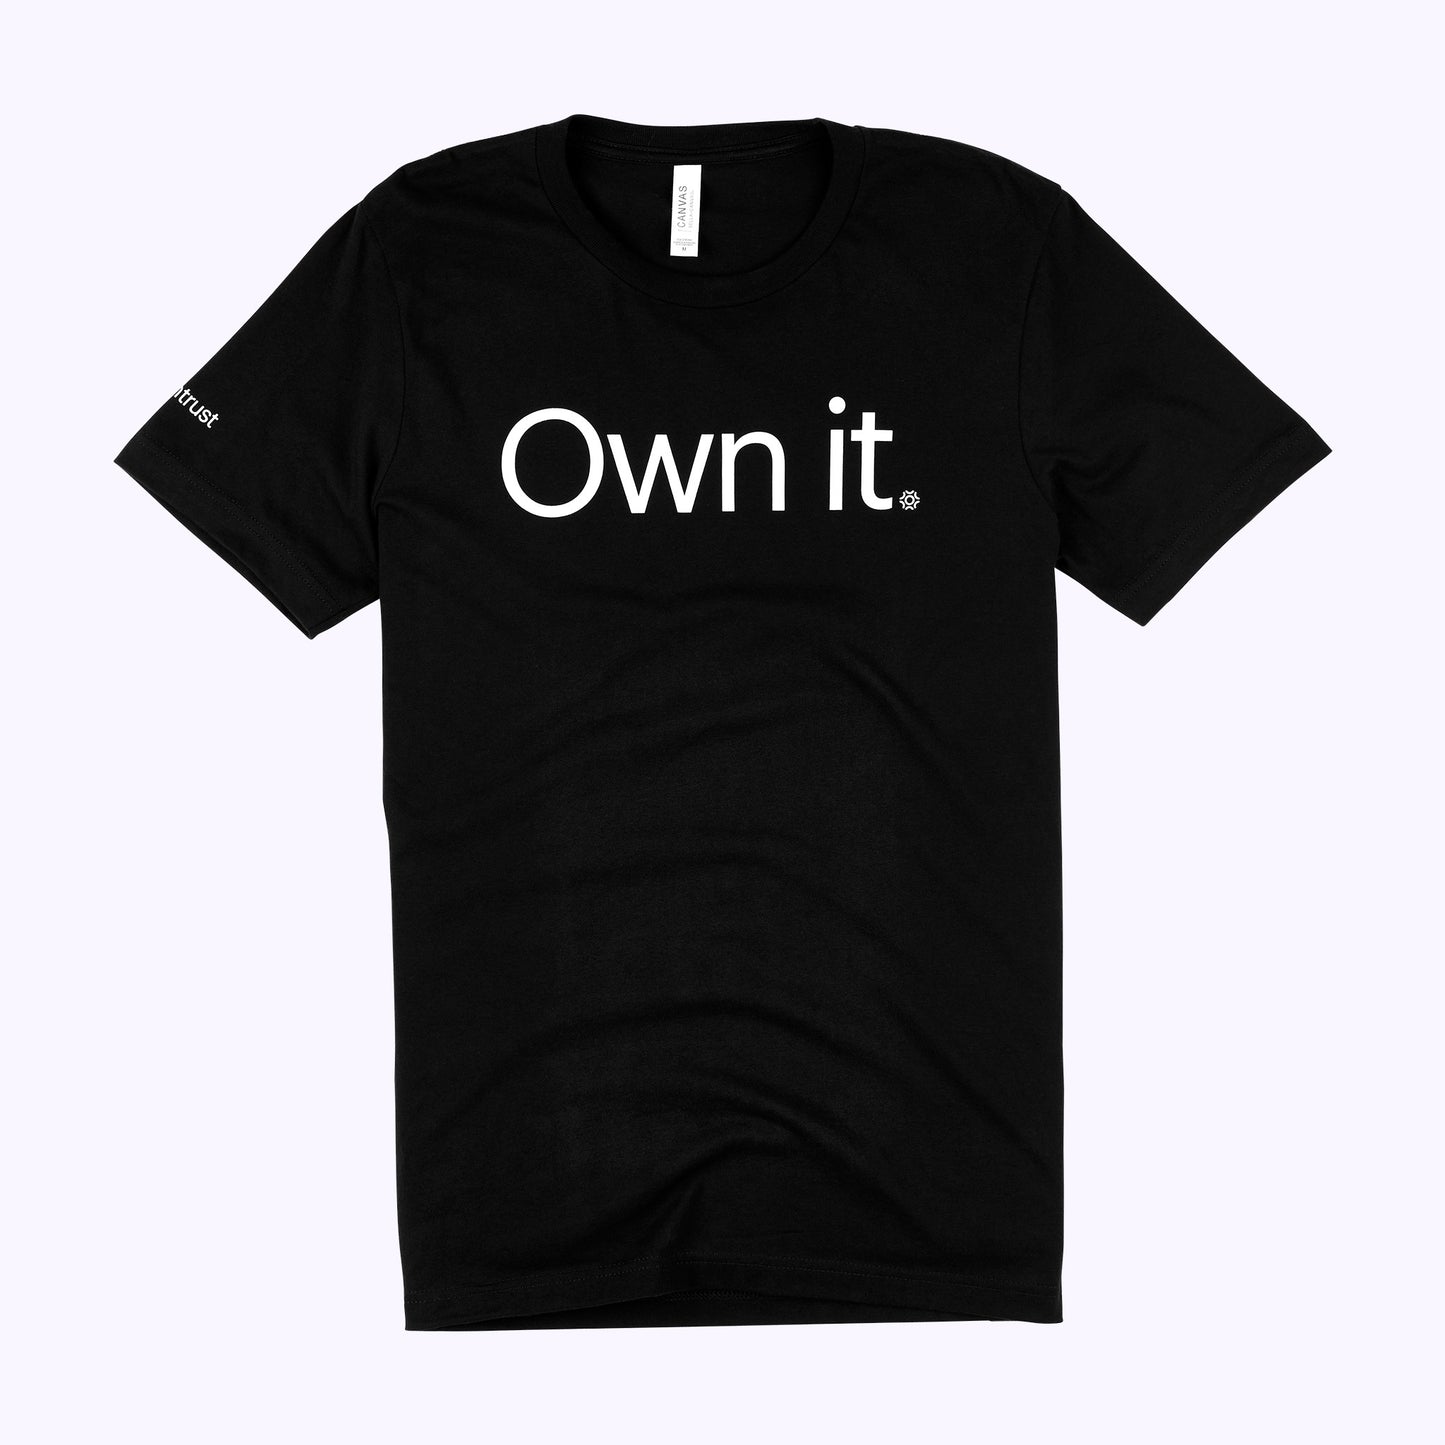 Braintrust 'Own it' T-shirt